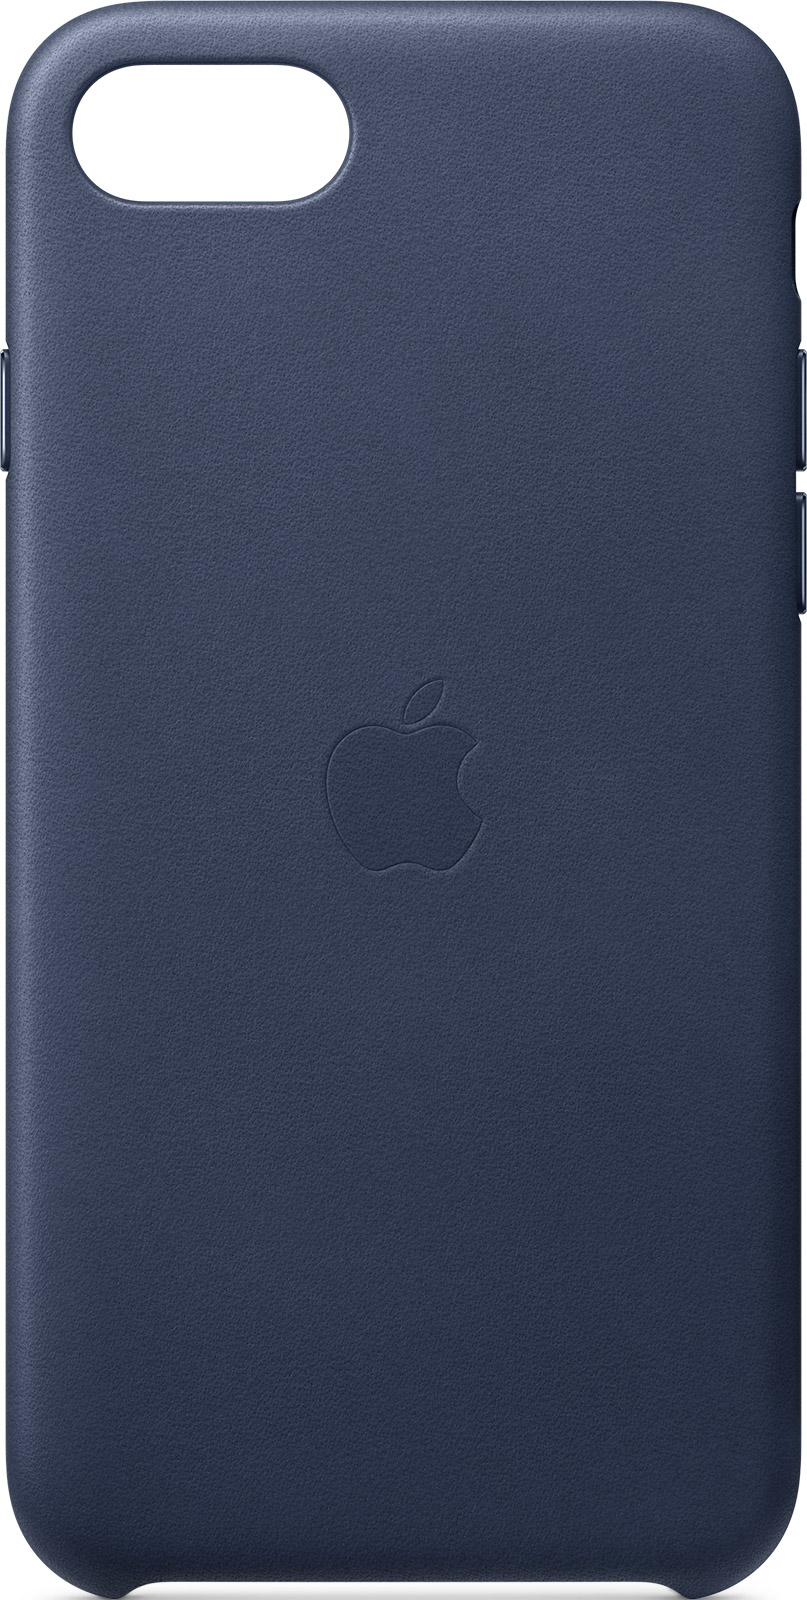 Apple-Leder-Case-iPhone-SE-2020-Mitternachtsblau-01.jpg